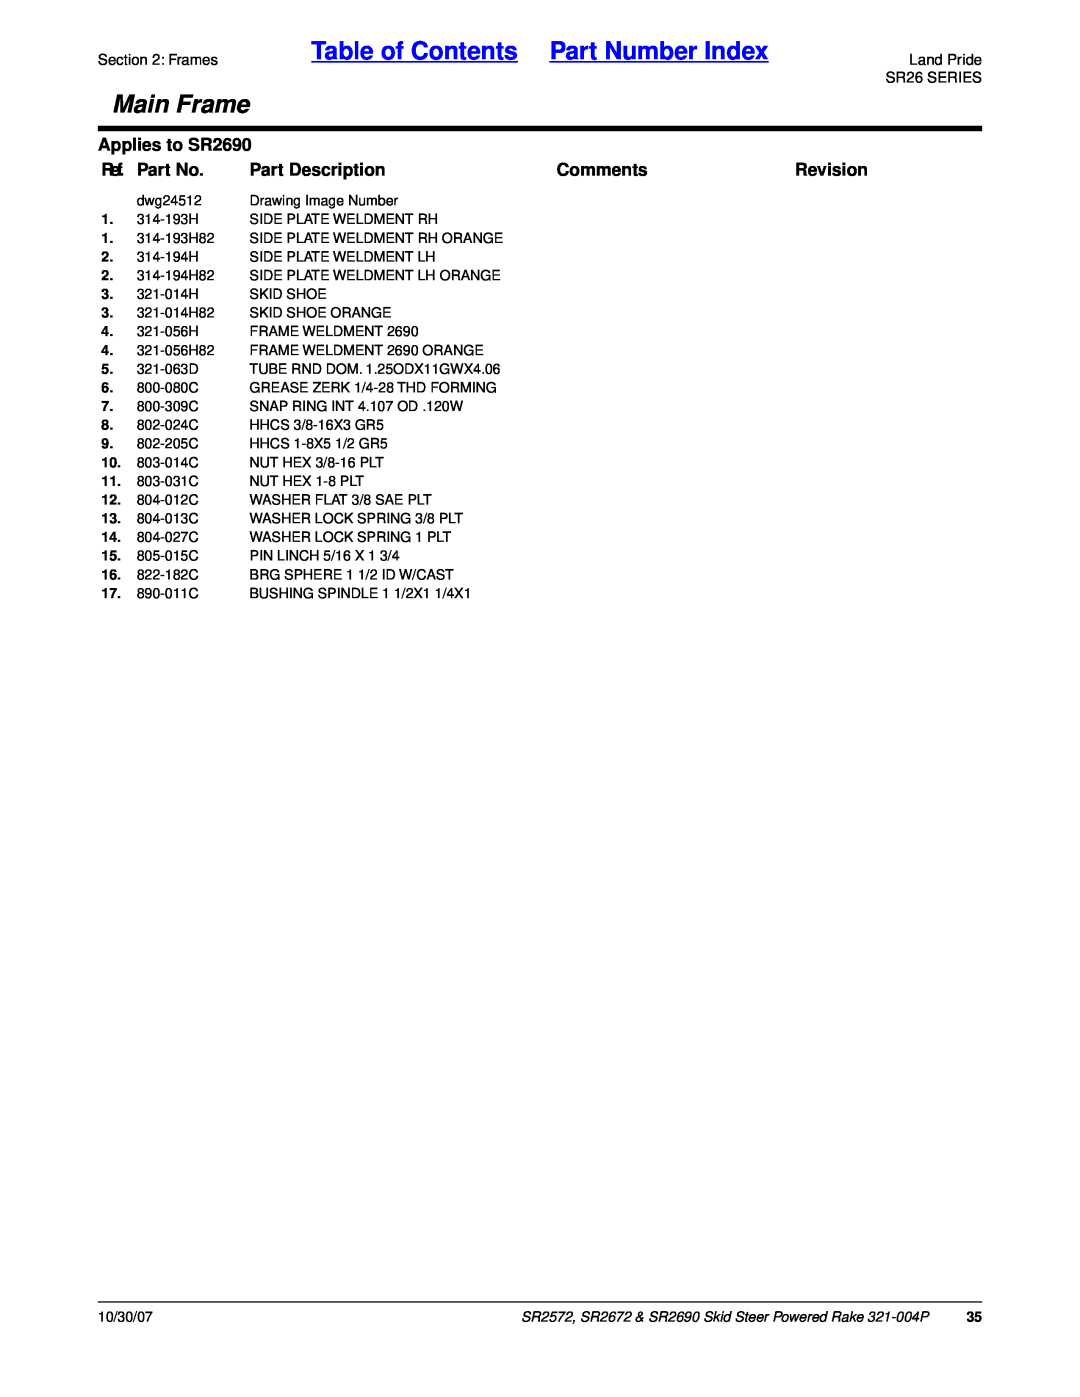 Land Pride SR2572 manual Table of Contents Part Number Index, Main Frame, Applies to SR2690, Ref. Part No, Part Description 